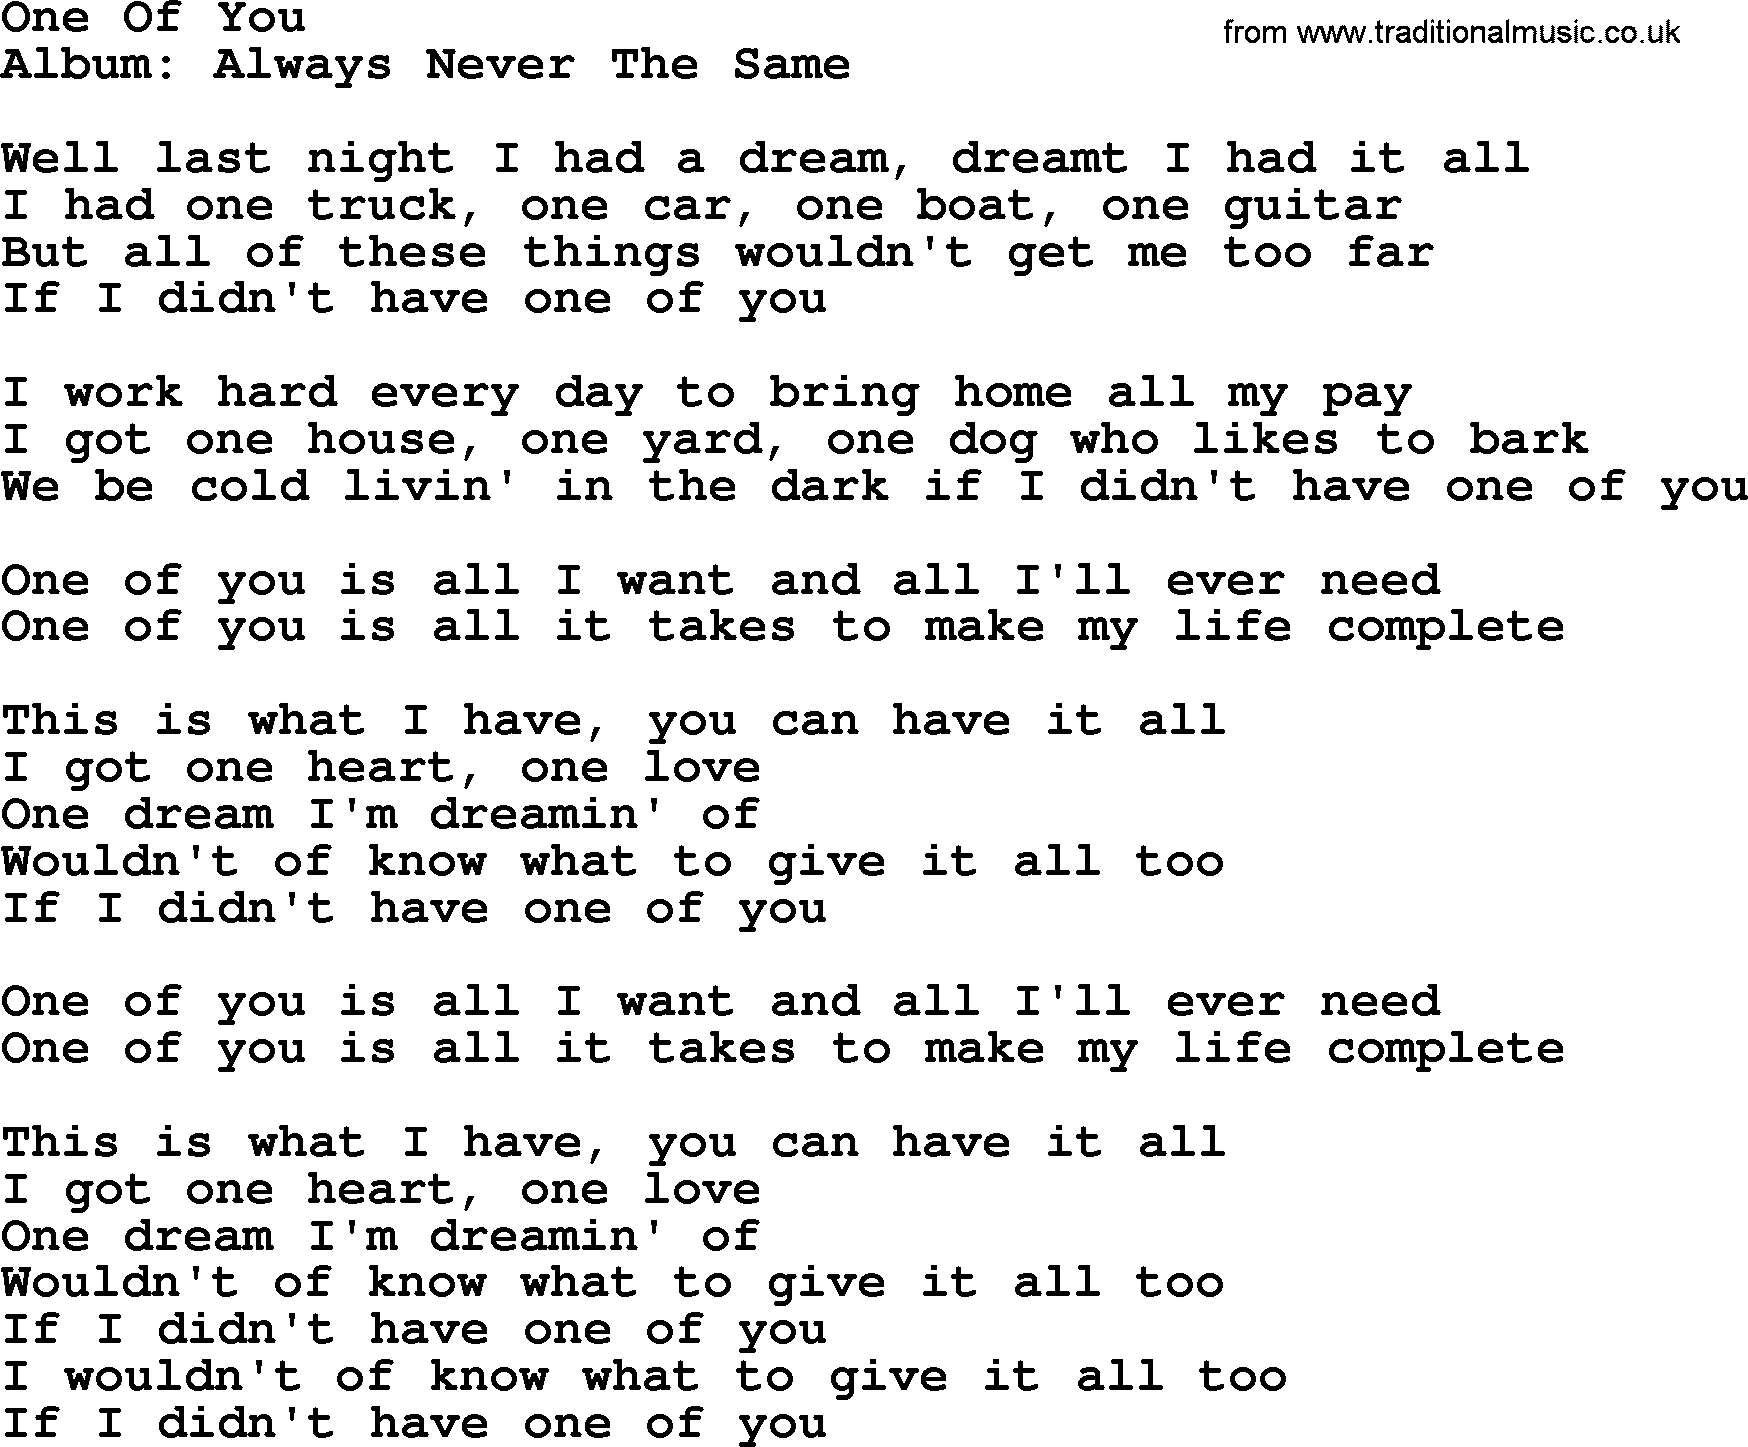 George Strait song: One Of You, lyrics